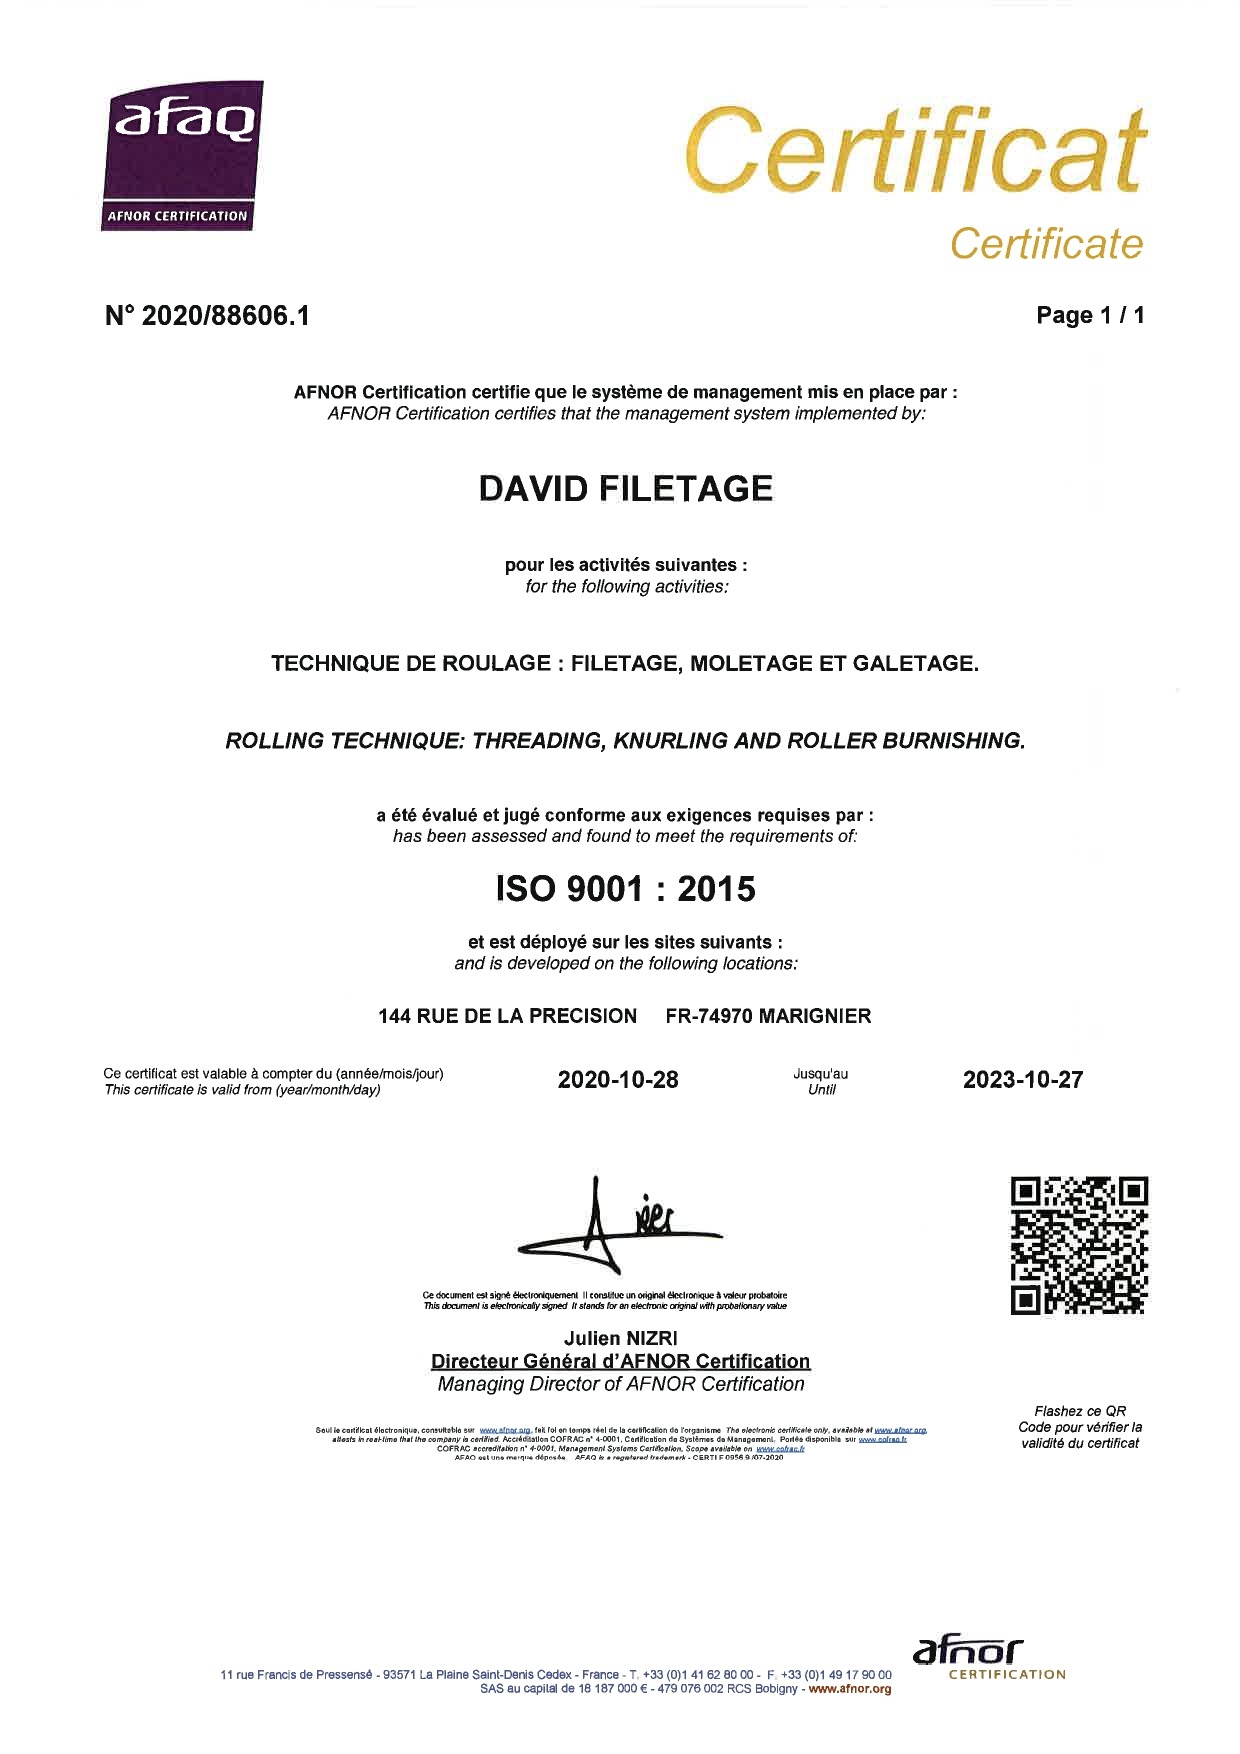 David Filetage - certification iso 9001